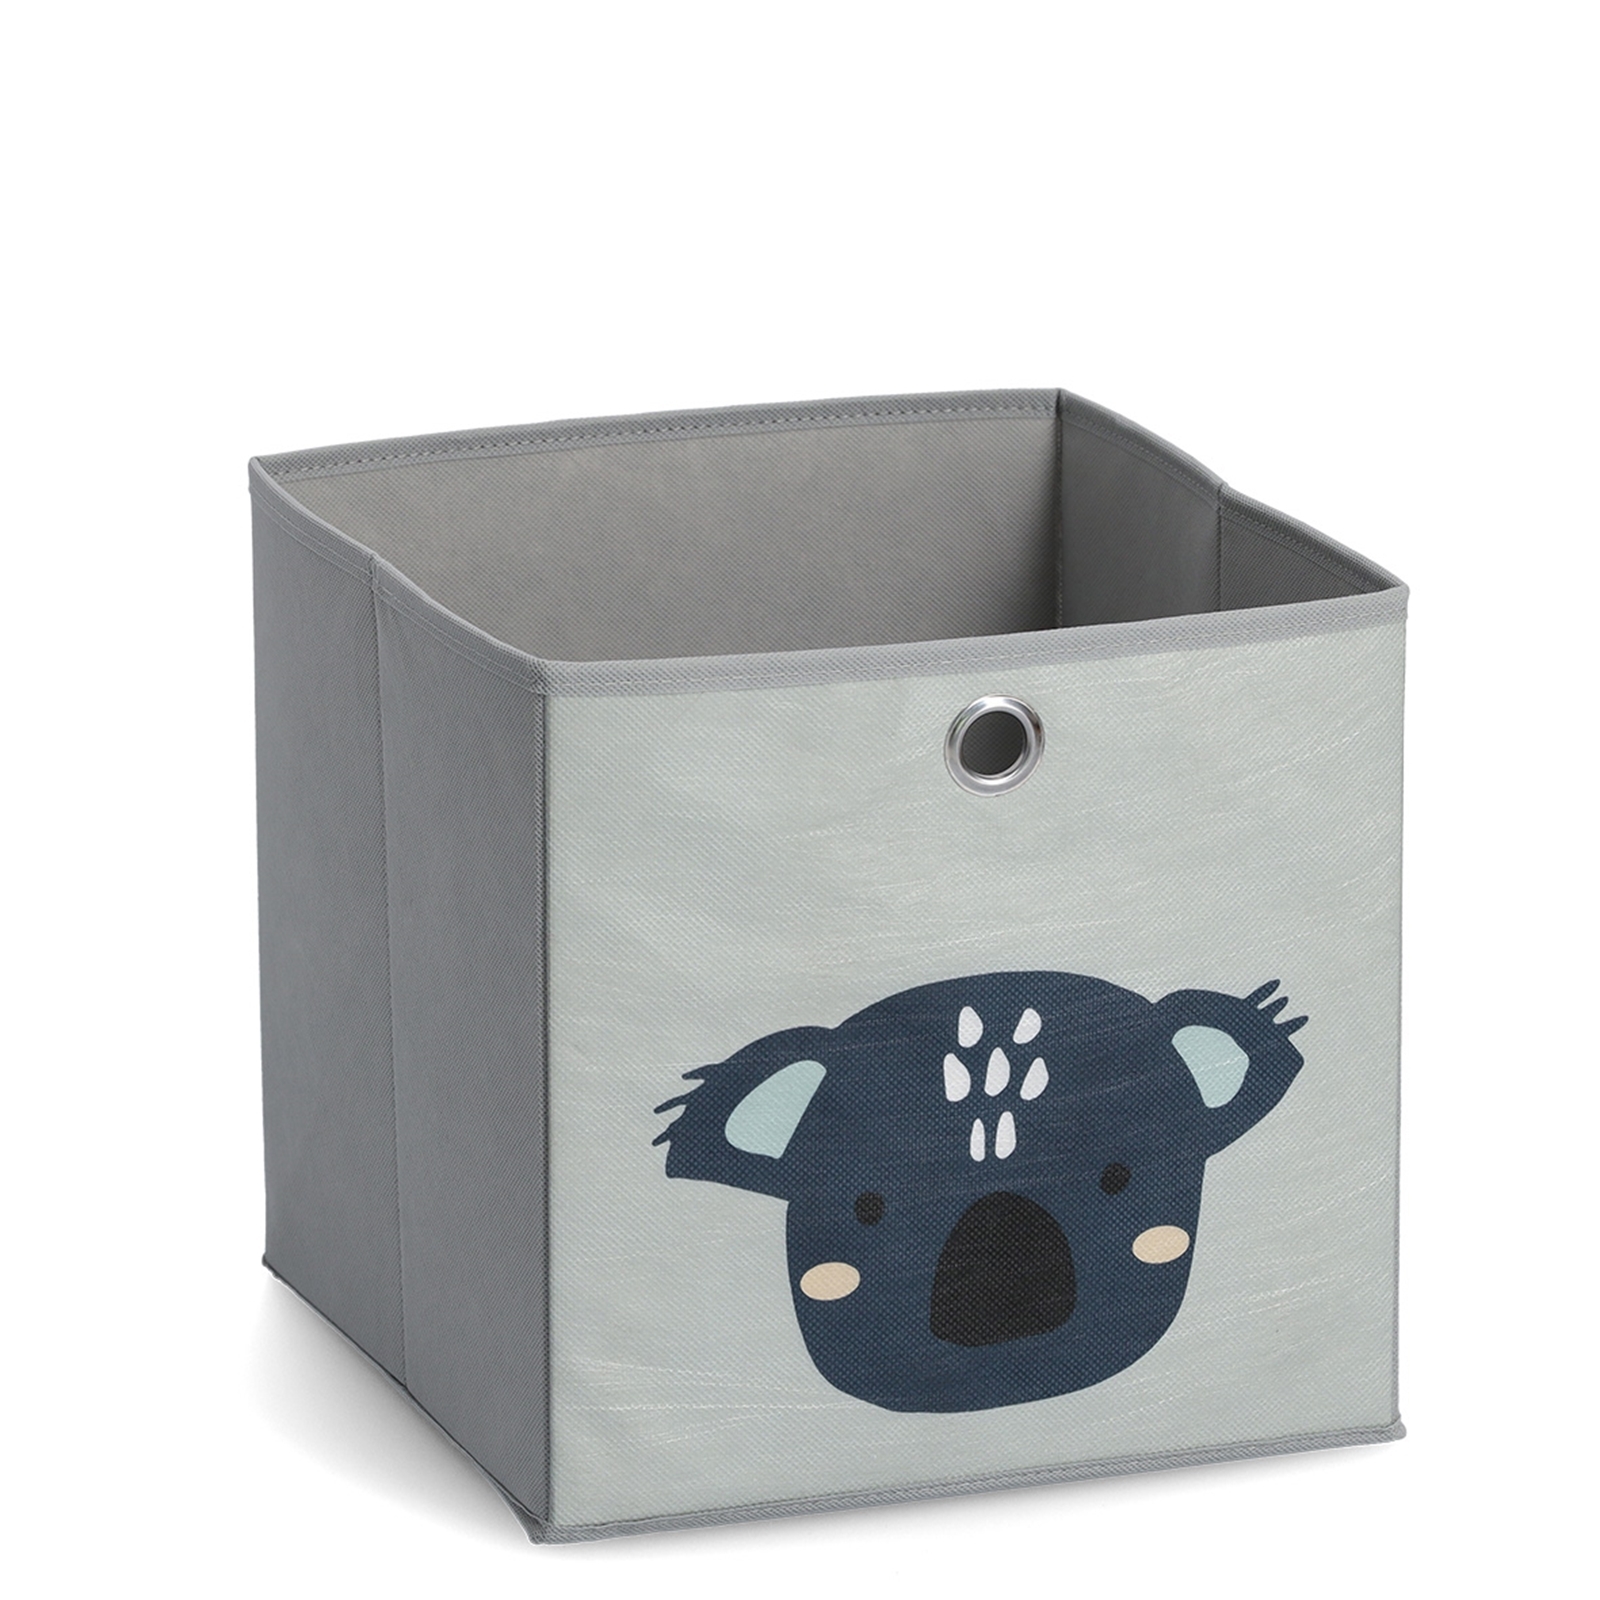 | Körbe Aufbewahrungsbox | Present Aufbewahrungsboxen | HTI Aufbewahrung Accessoires Ordnung- Koala ZELLER & & Vlies |